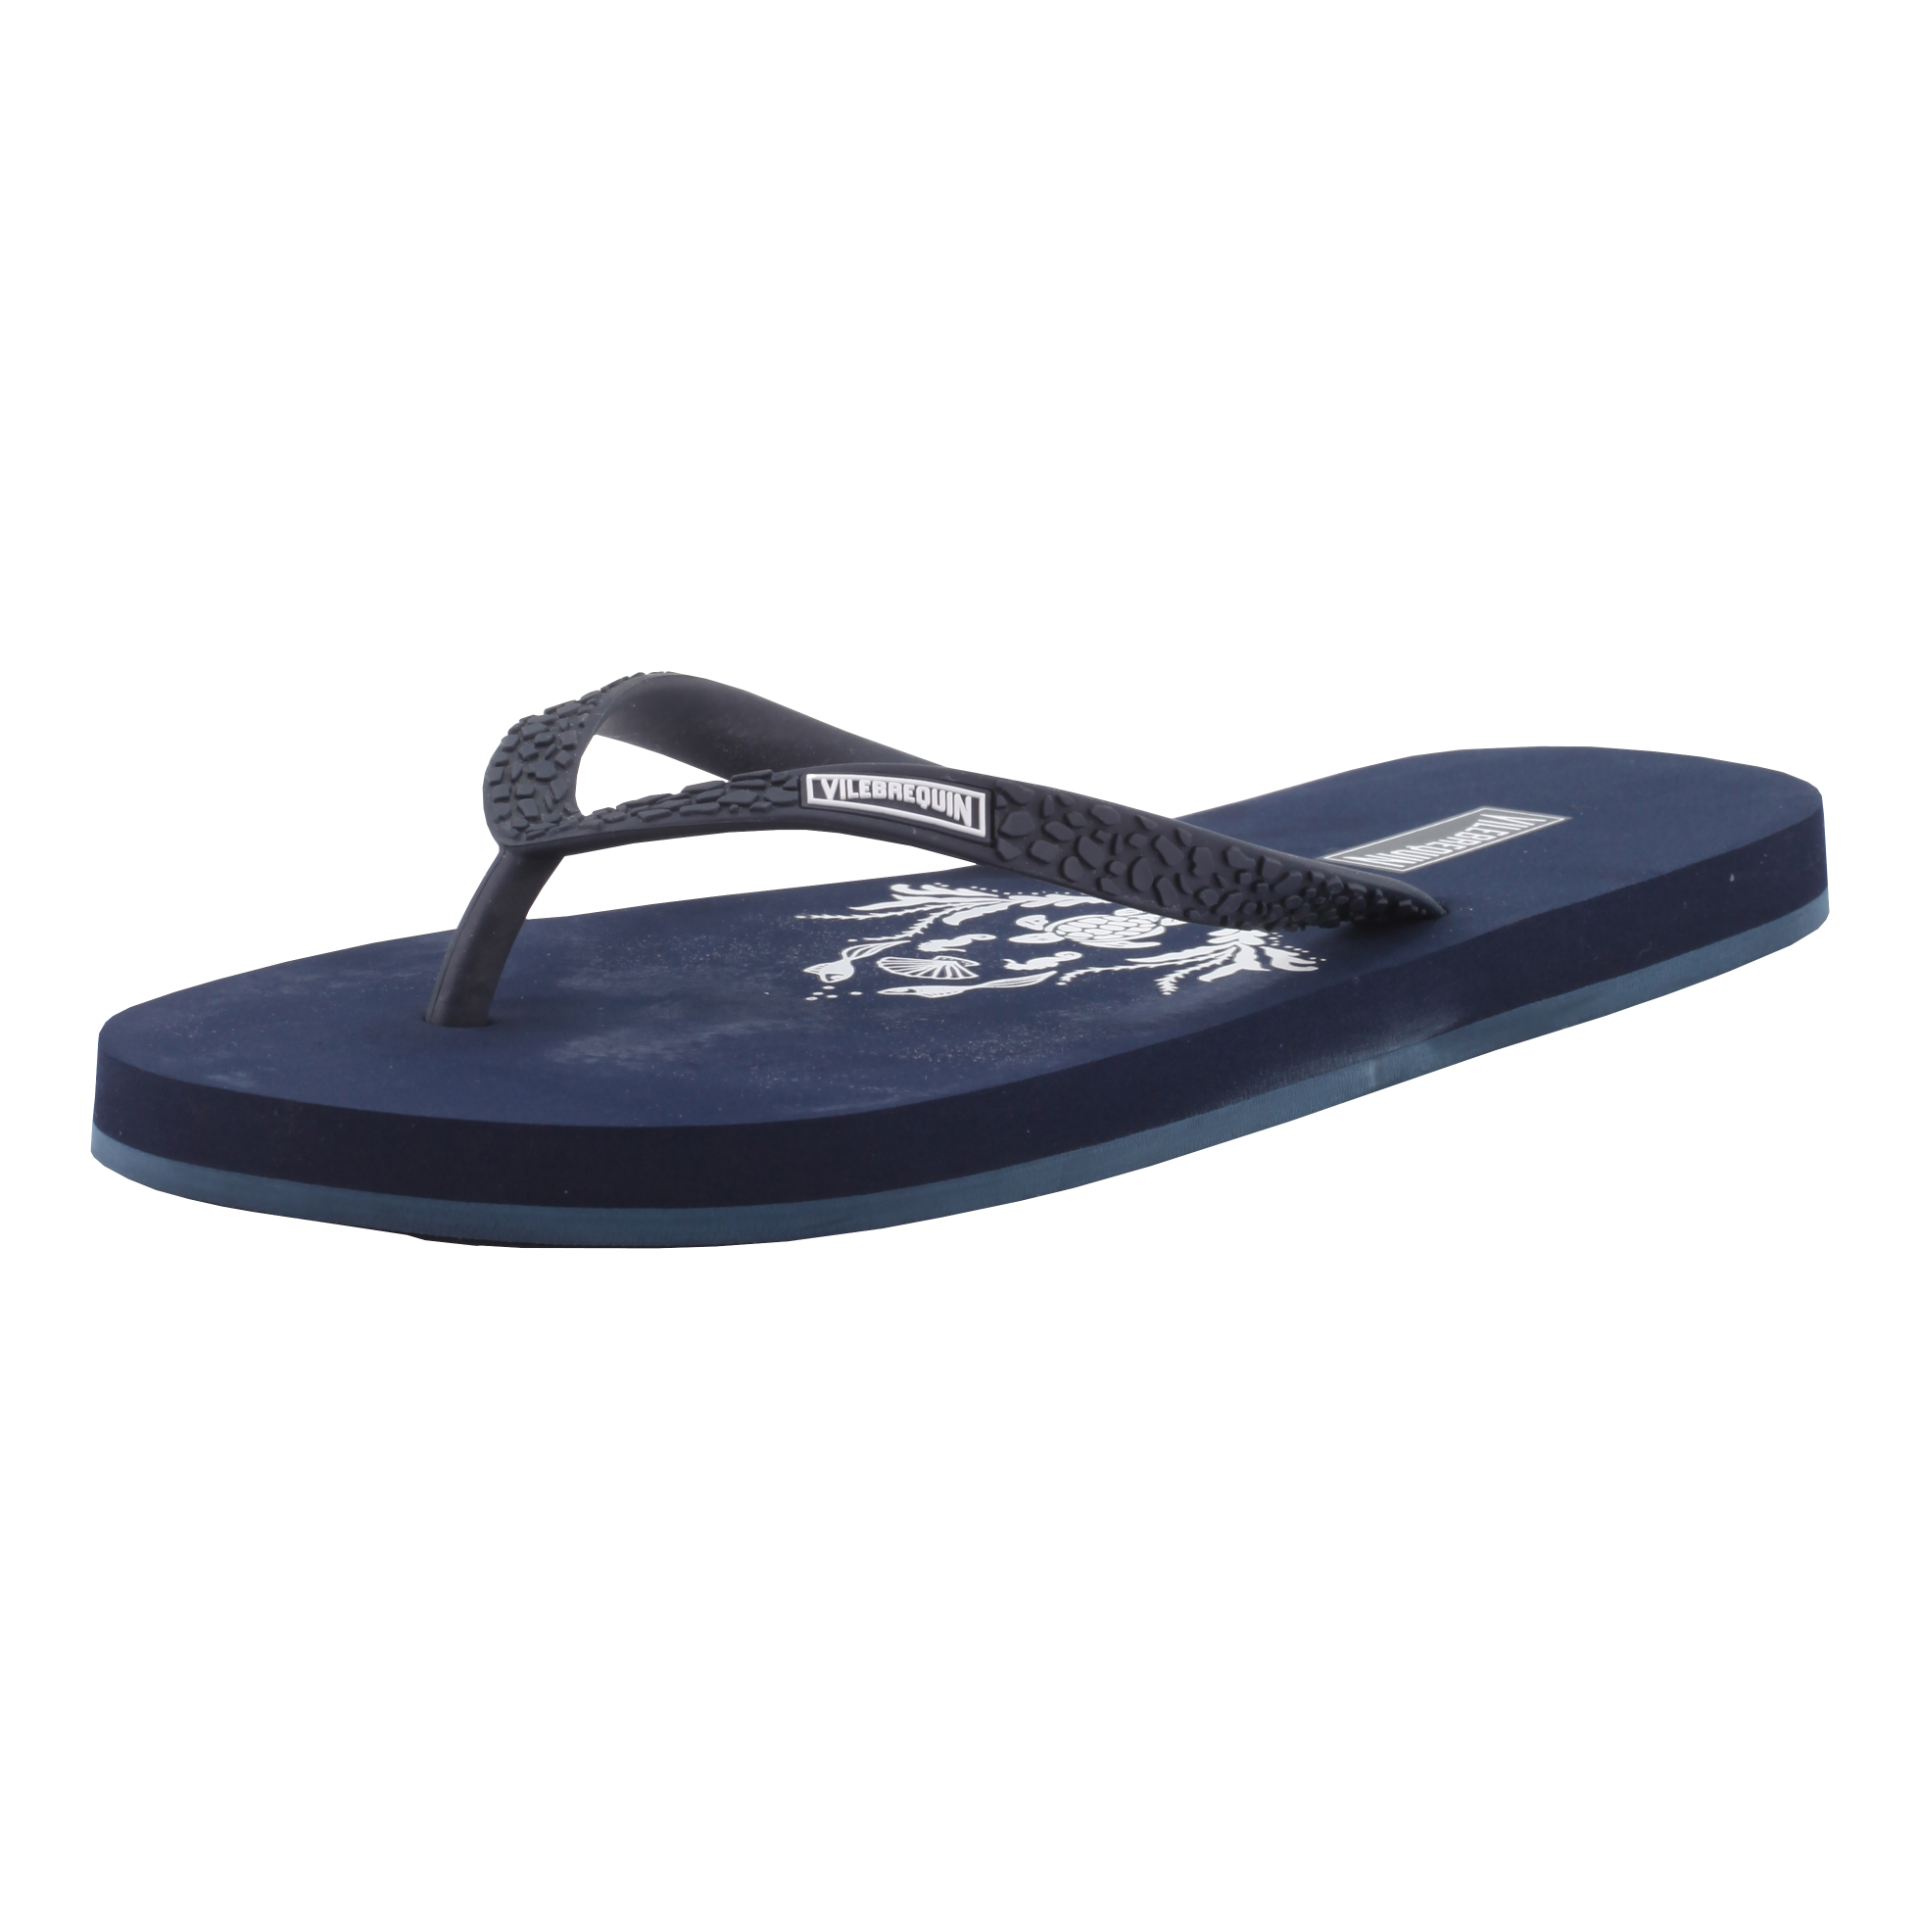 VILEBREQUIN Flip Flops Navy - Authentic & New - Size 3.5 / 4 - RRP Â£65+ ! - Bild 5 aus 7